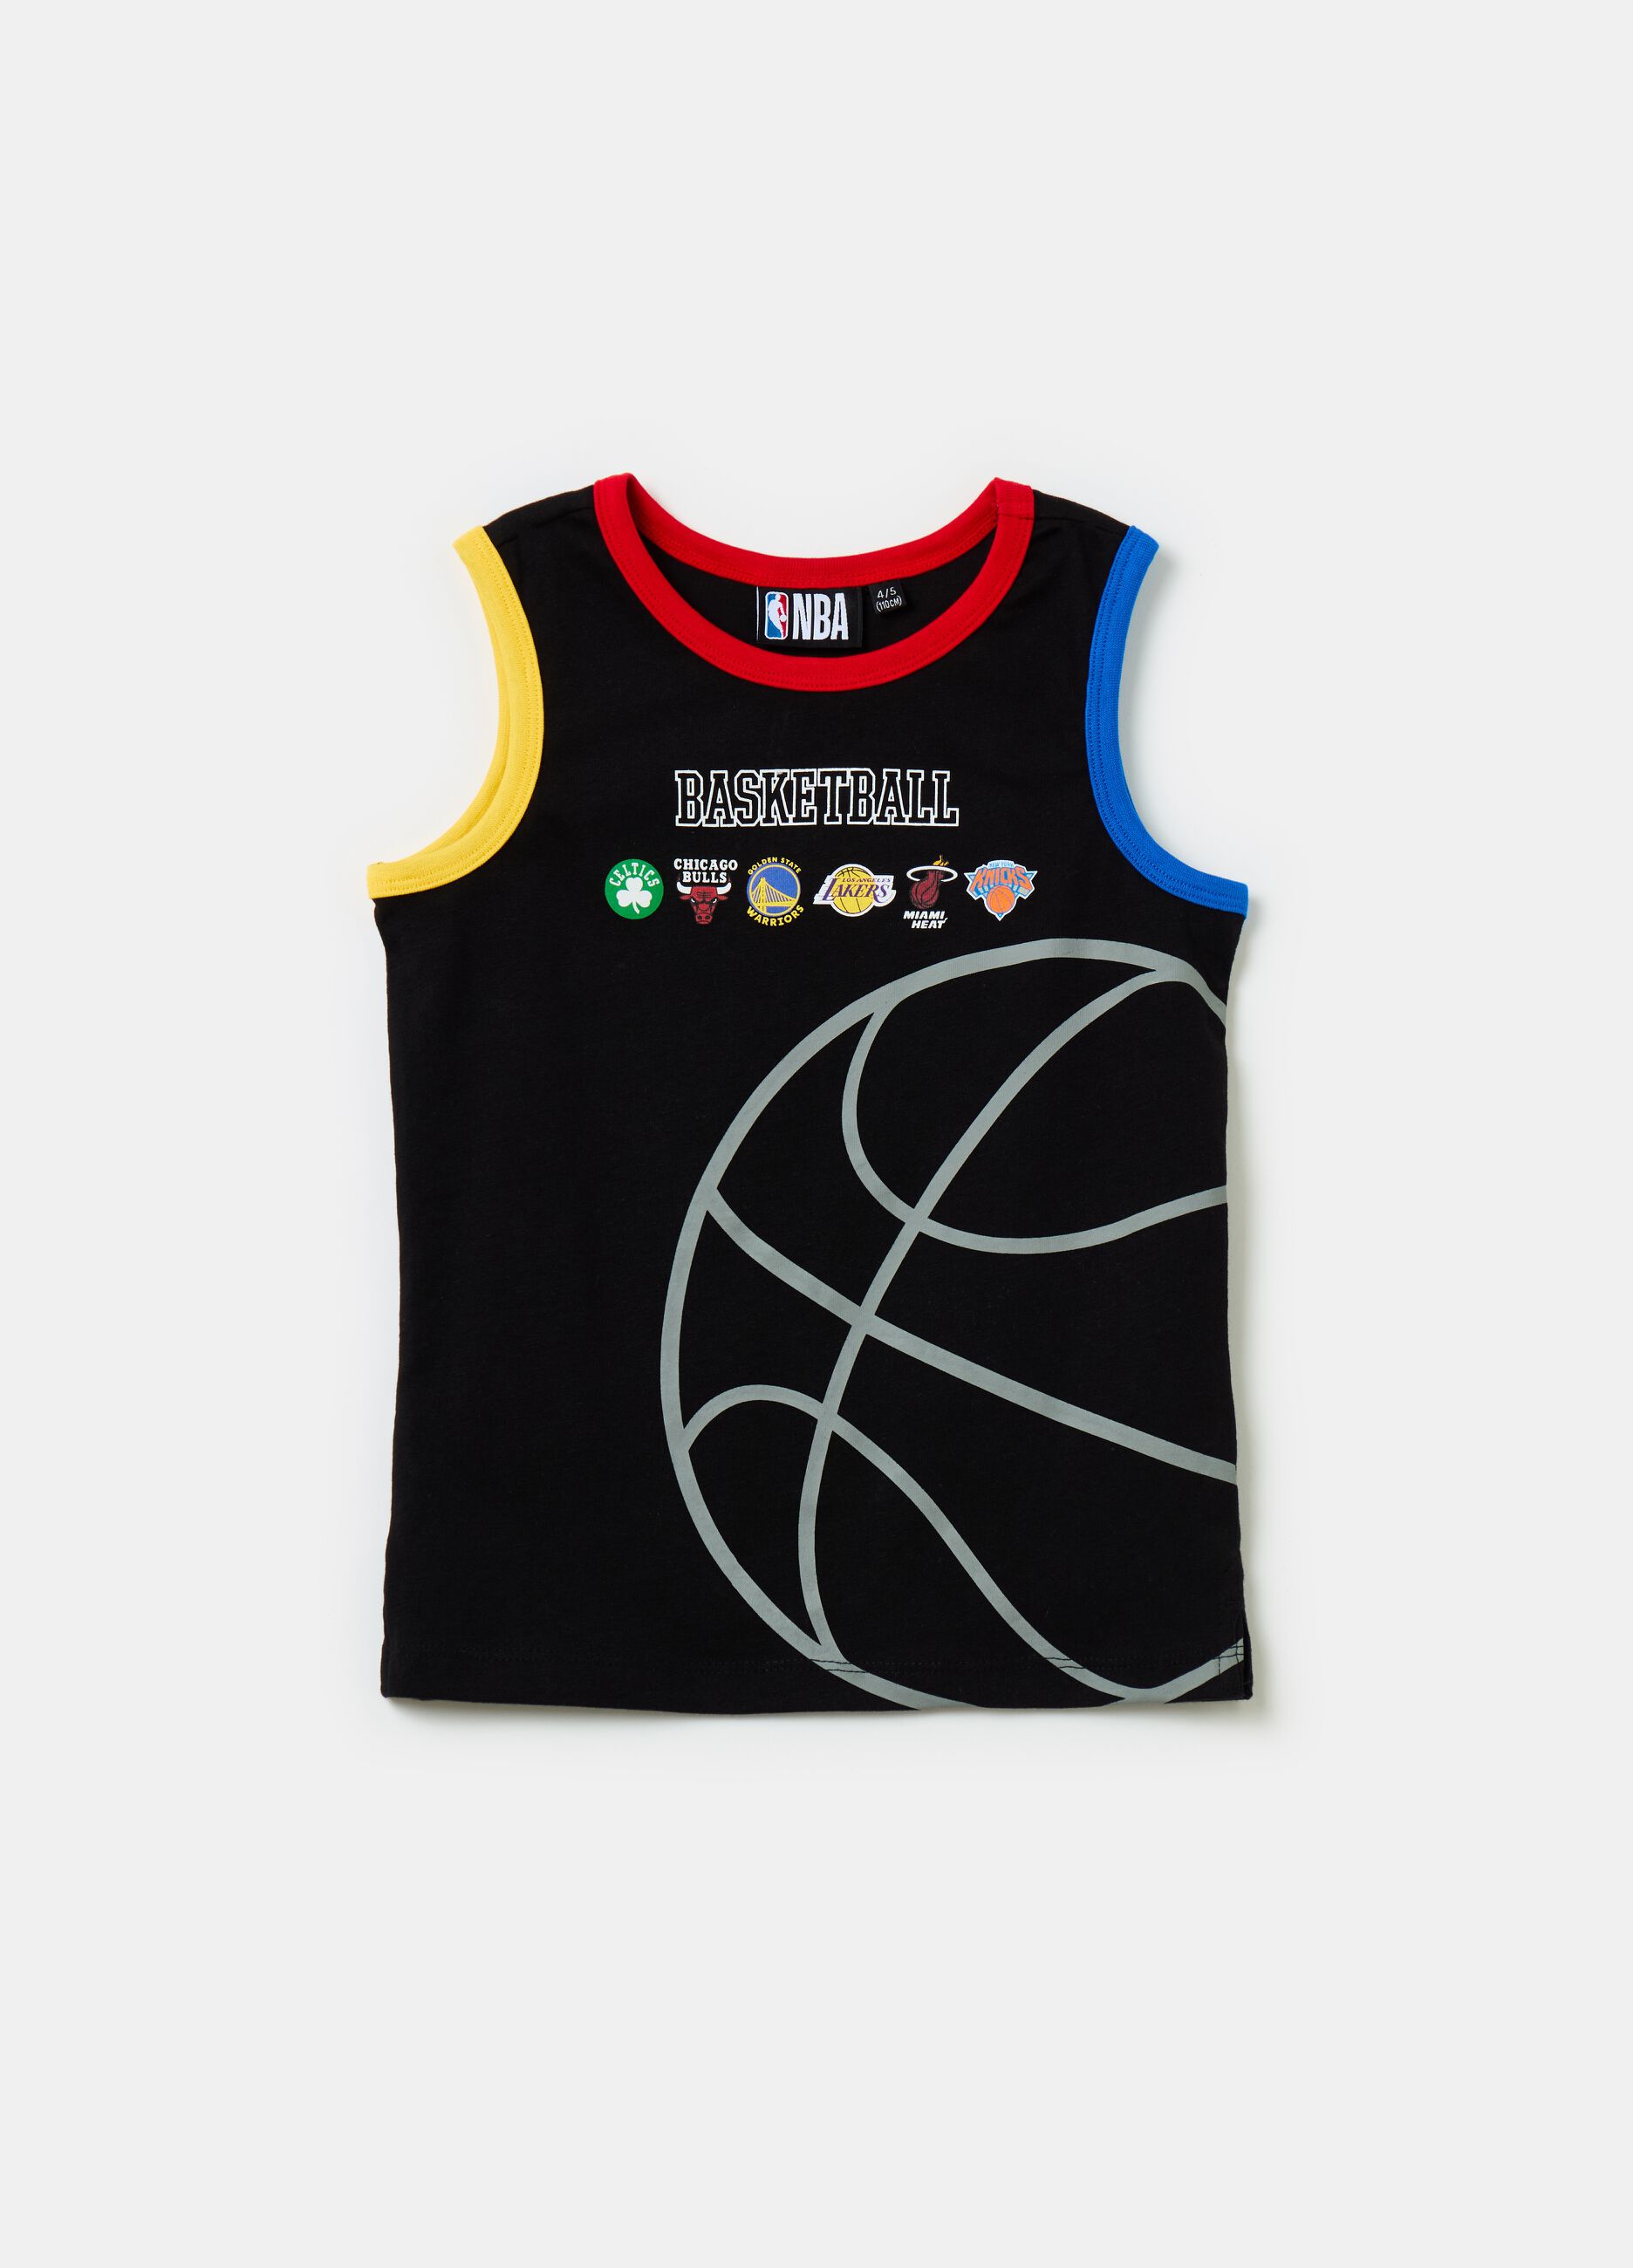 Racerback vest with NBA teams’ logos print